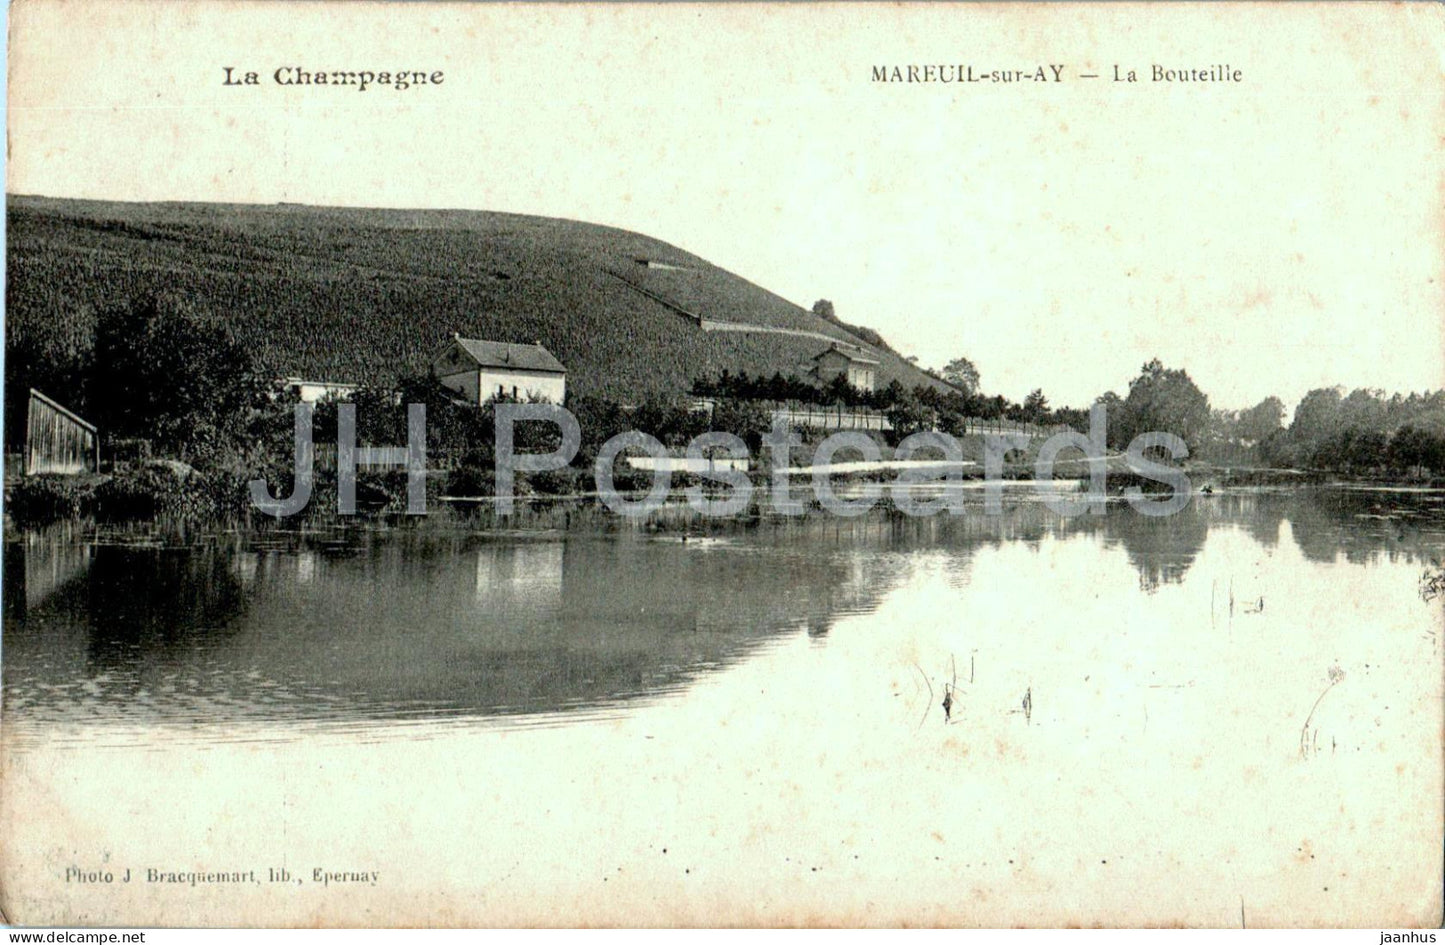 Mareuil sur Ay - La Bouteille - La champagne - old postcard - 1917 - France - used - JH Postcards